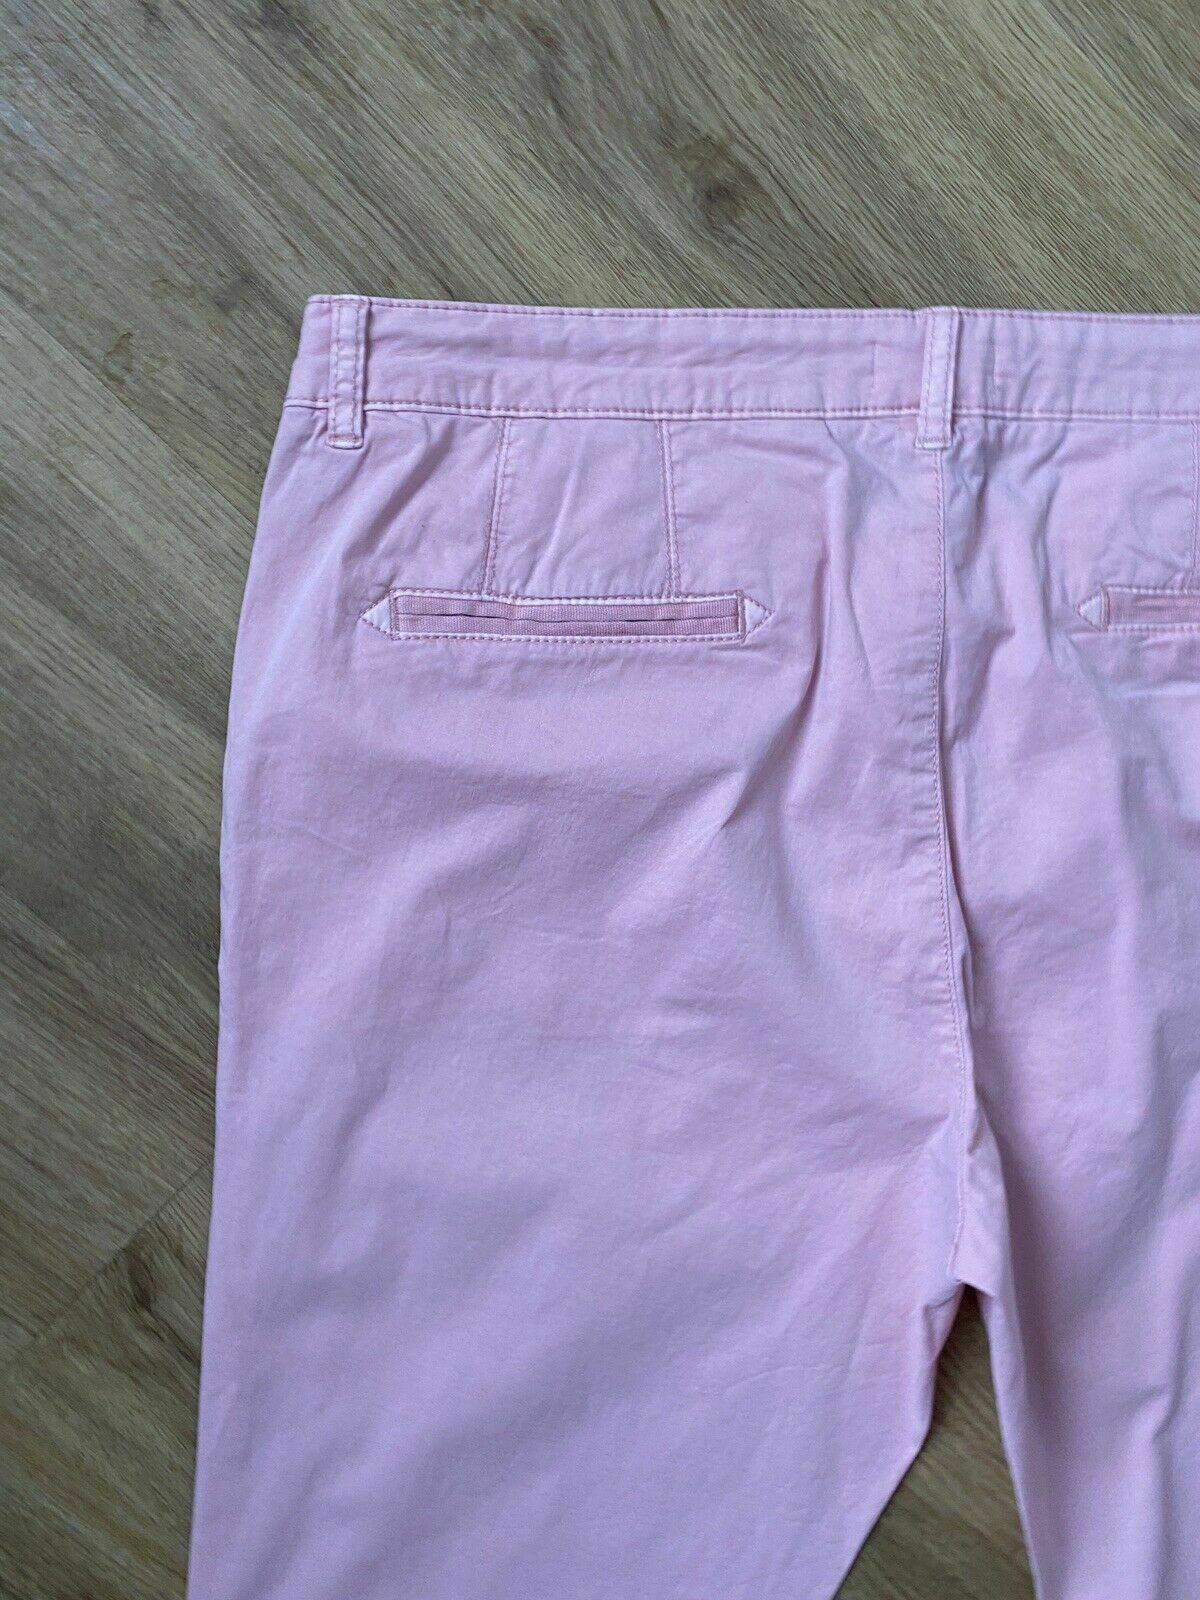 Esprit Slim Chino Size 16 Pink Mid Rise Slim Leg RRP £39